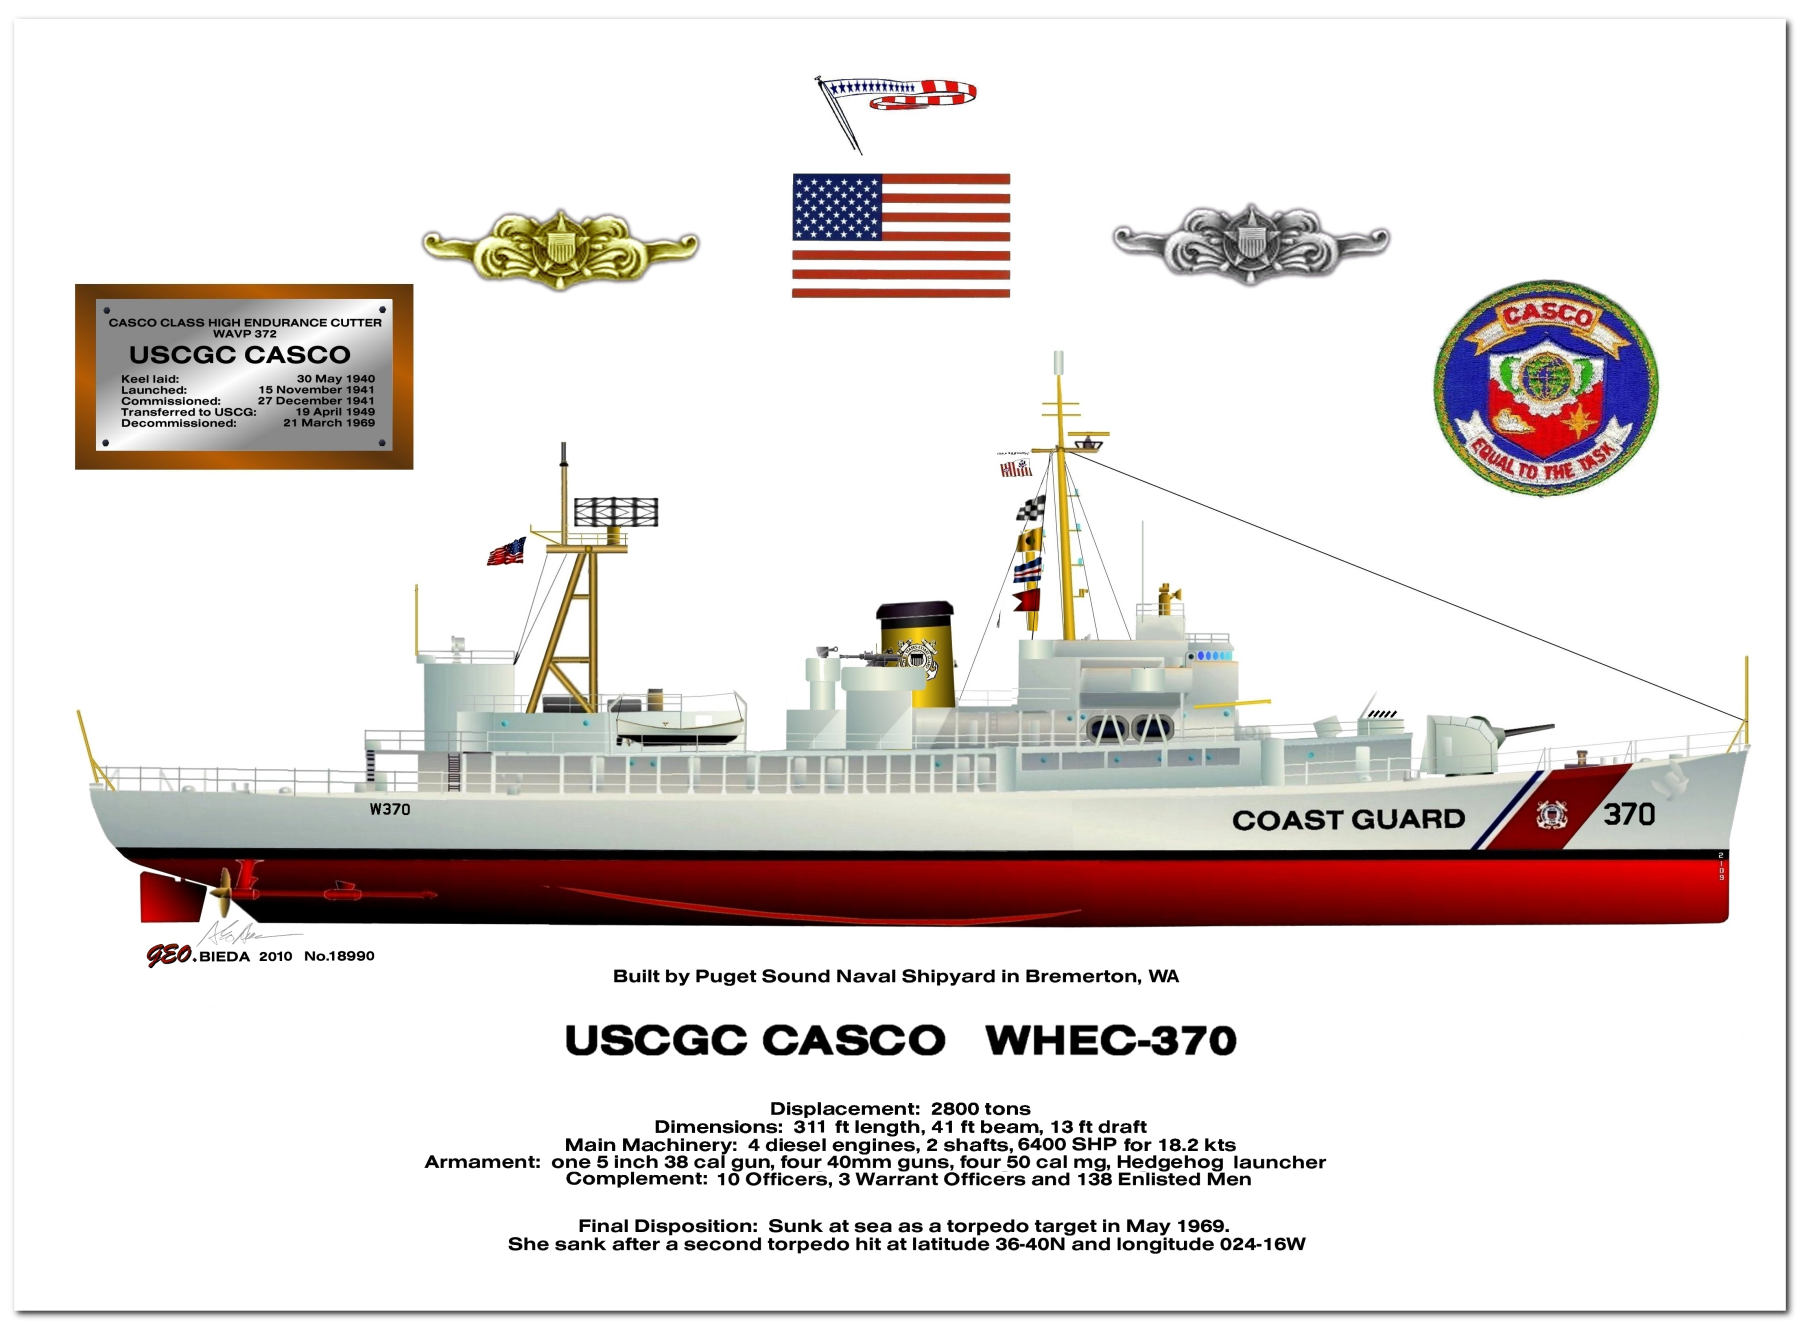 USCG Casco Class High Endurance Cutter Profile Drawings by George Bieda